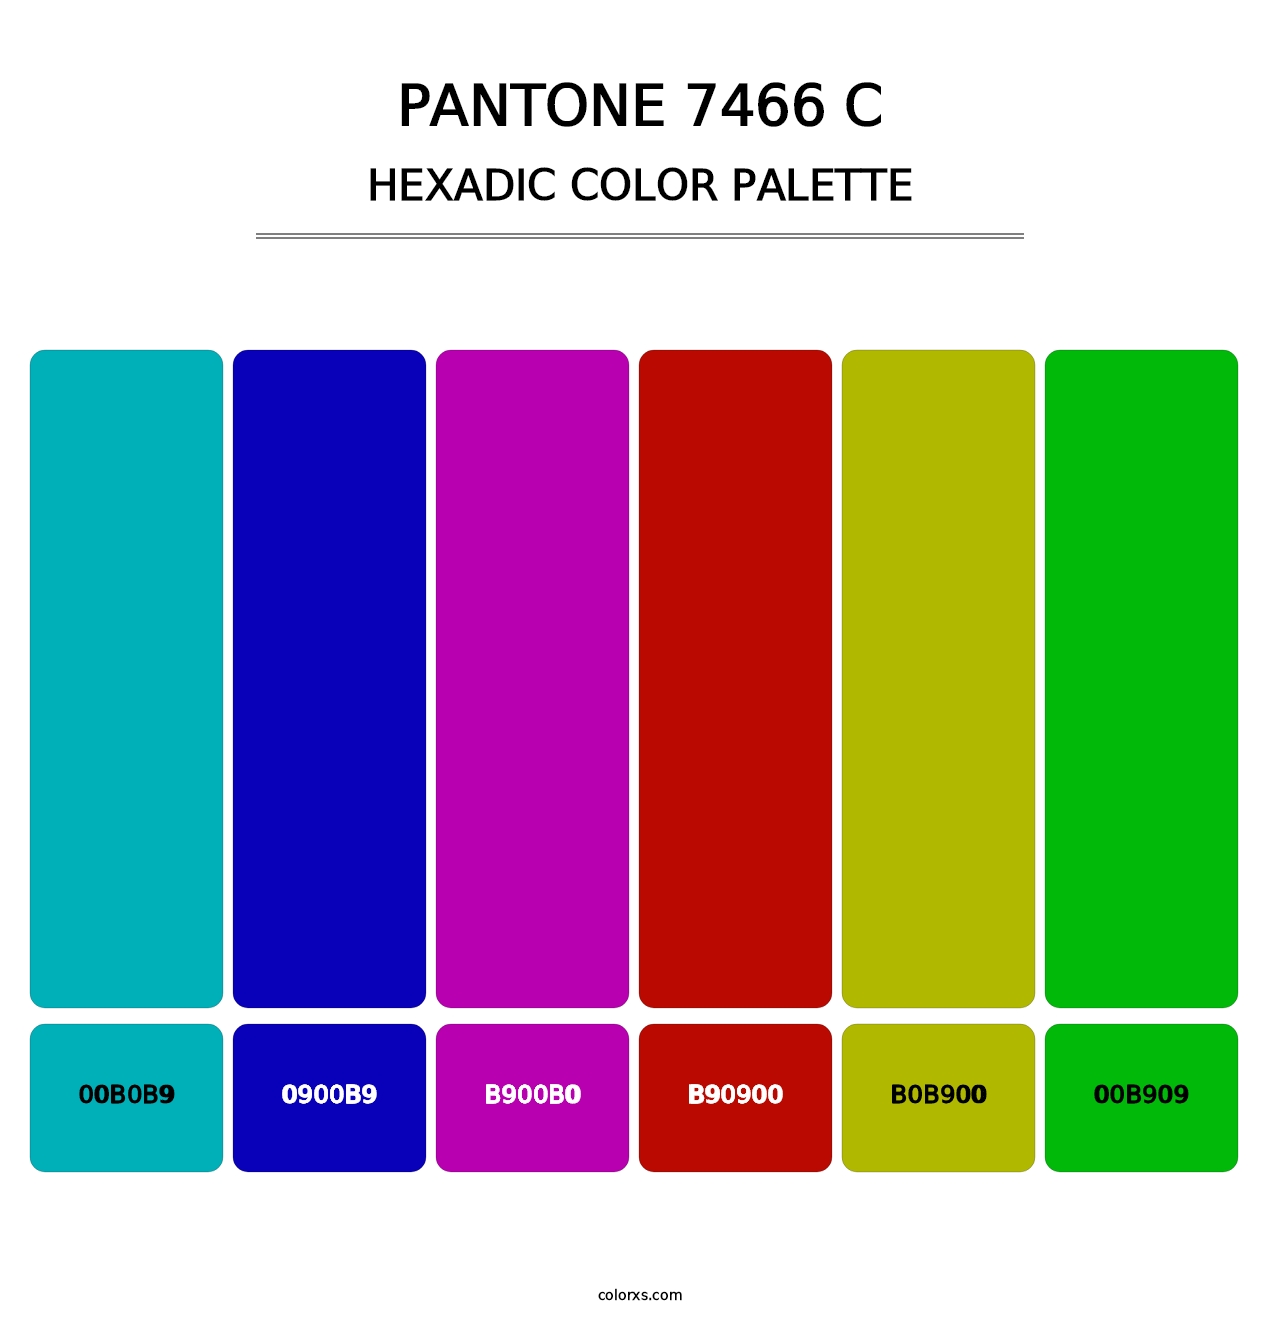 PANTONE 7466 C - Hexadic Color Palette